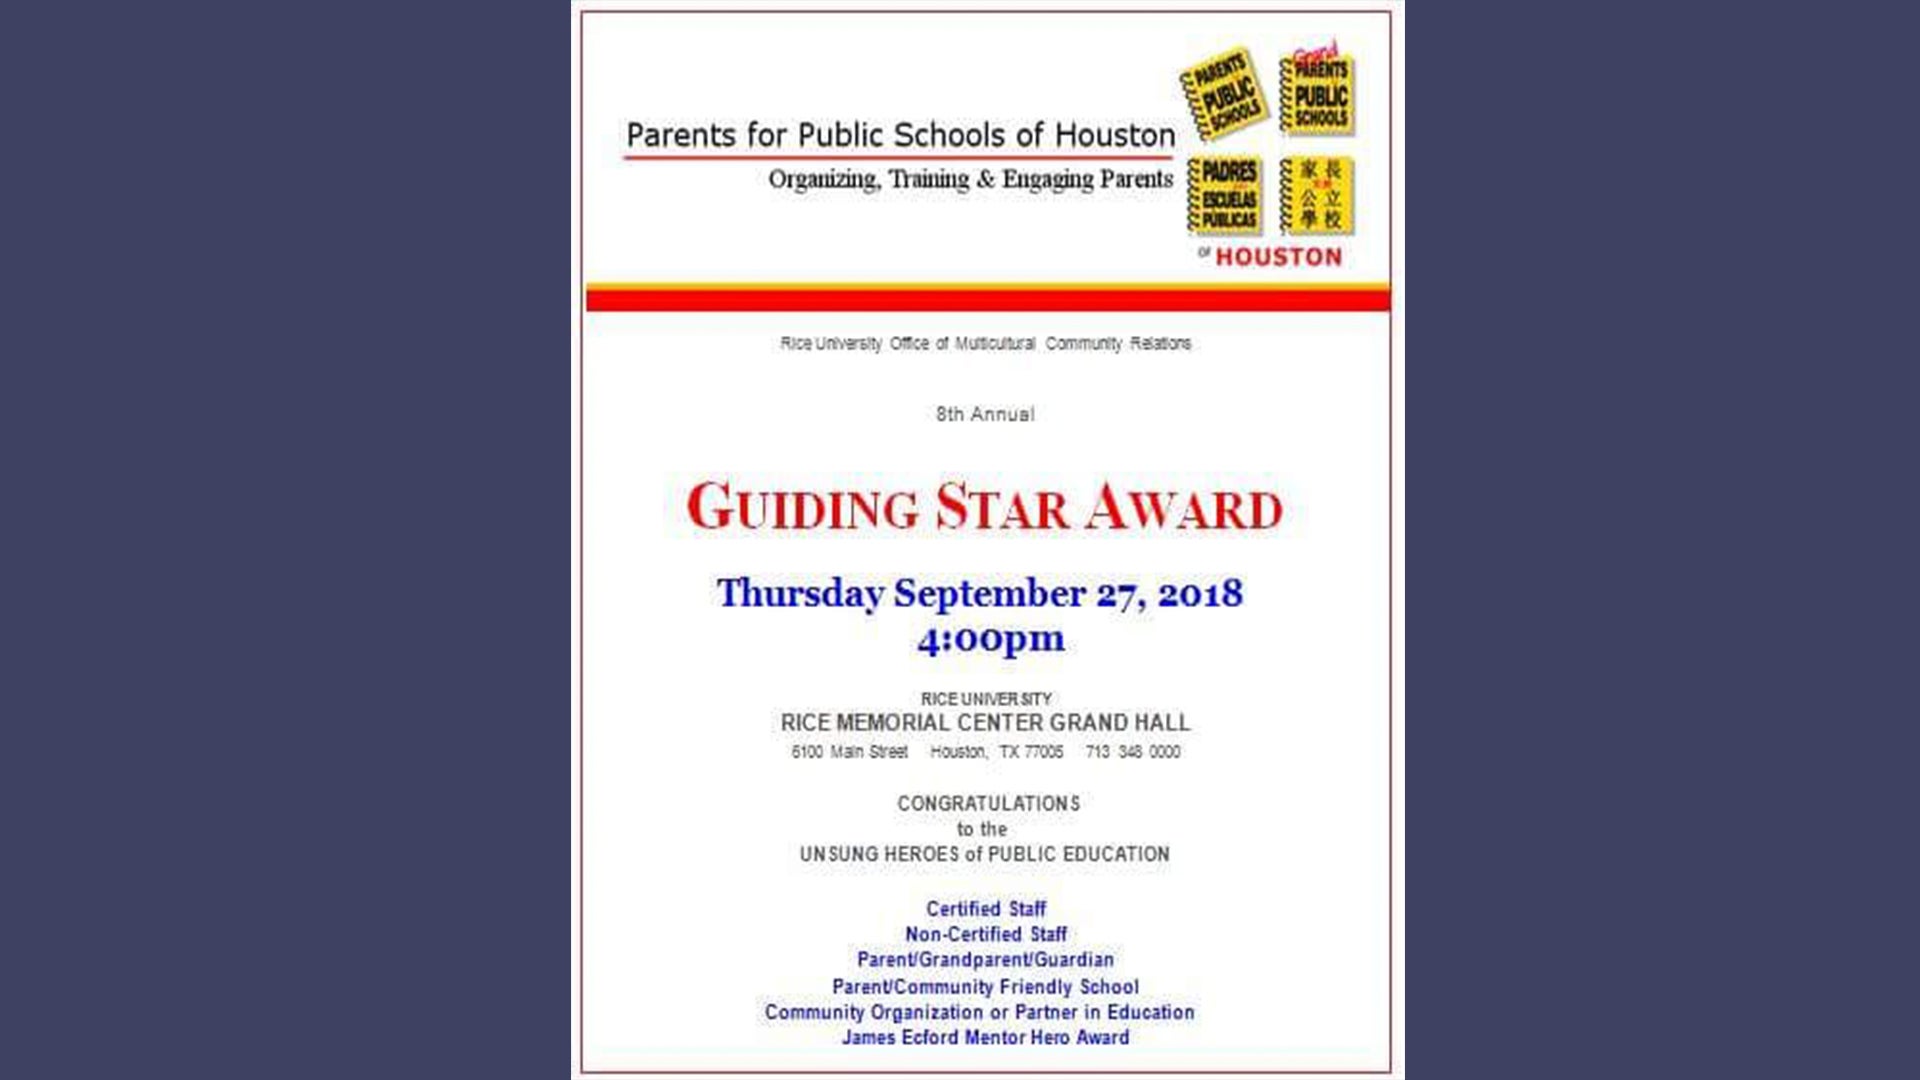 Gail Hamilton awarded the Guiding Star Award